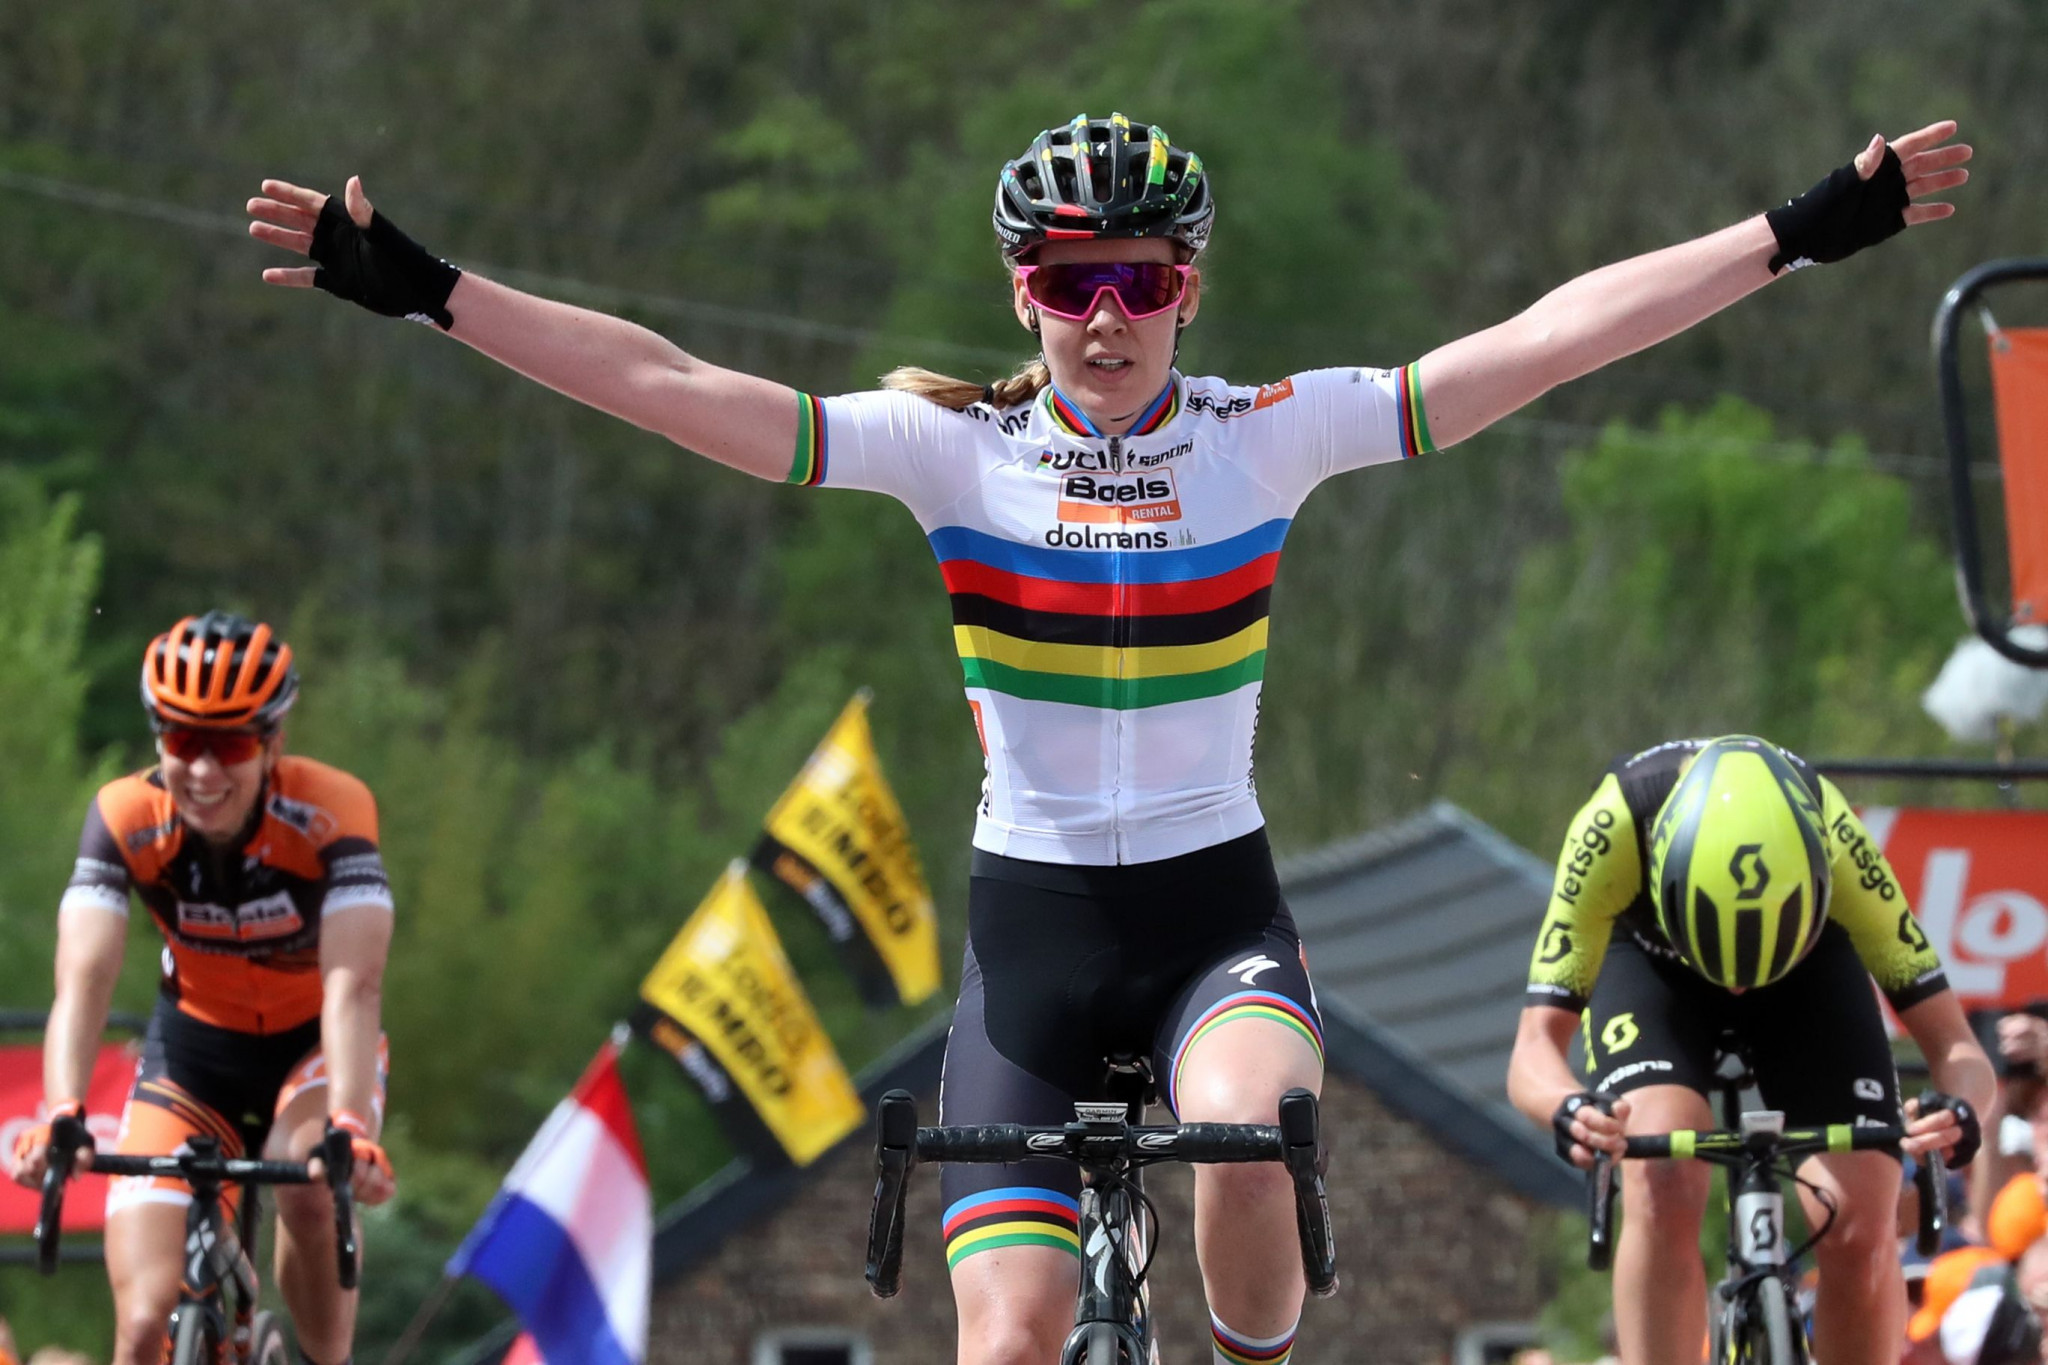 Dutch rider Anna van der Breggen is defending the women's road race crown ©Getty Images